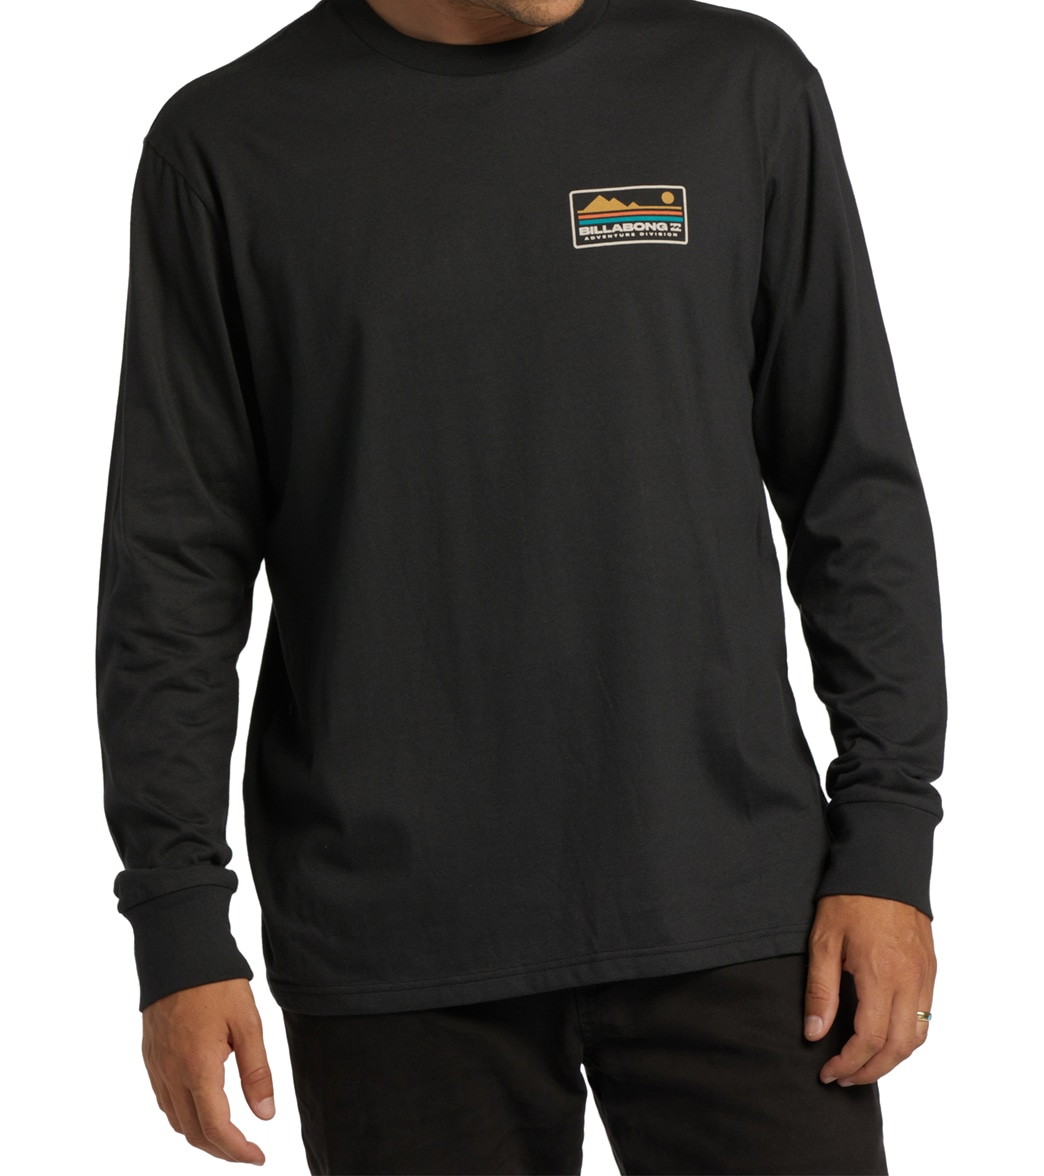 Billabong Men's Range Long Sleeve Tee Shirt - Washed Black Large Cotton - Swimoutlet.com